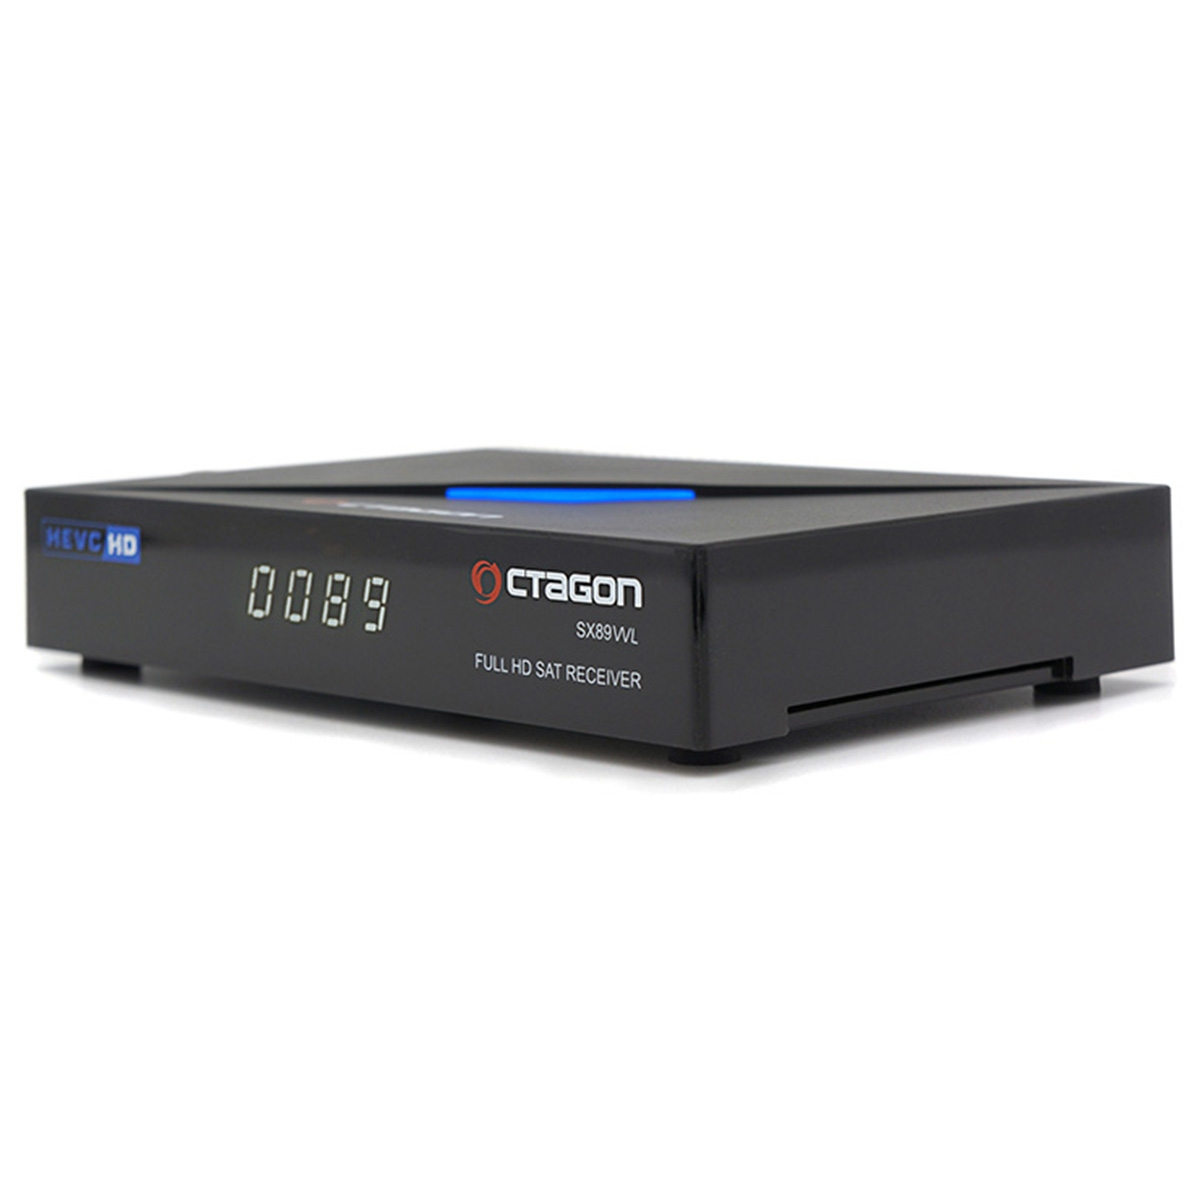 OCTAGON SX89 WL Full HD IP DVB-S2 Receiver Linux HDMI (Schwarz) Sat LAN Sat Tuner WiFi Receiver IP H.265